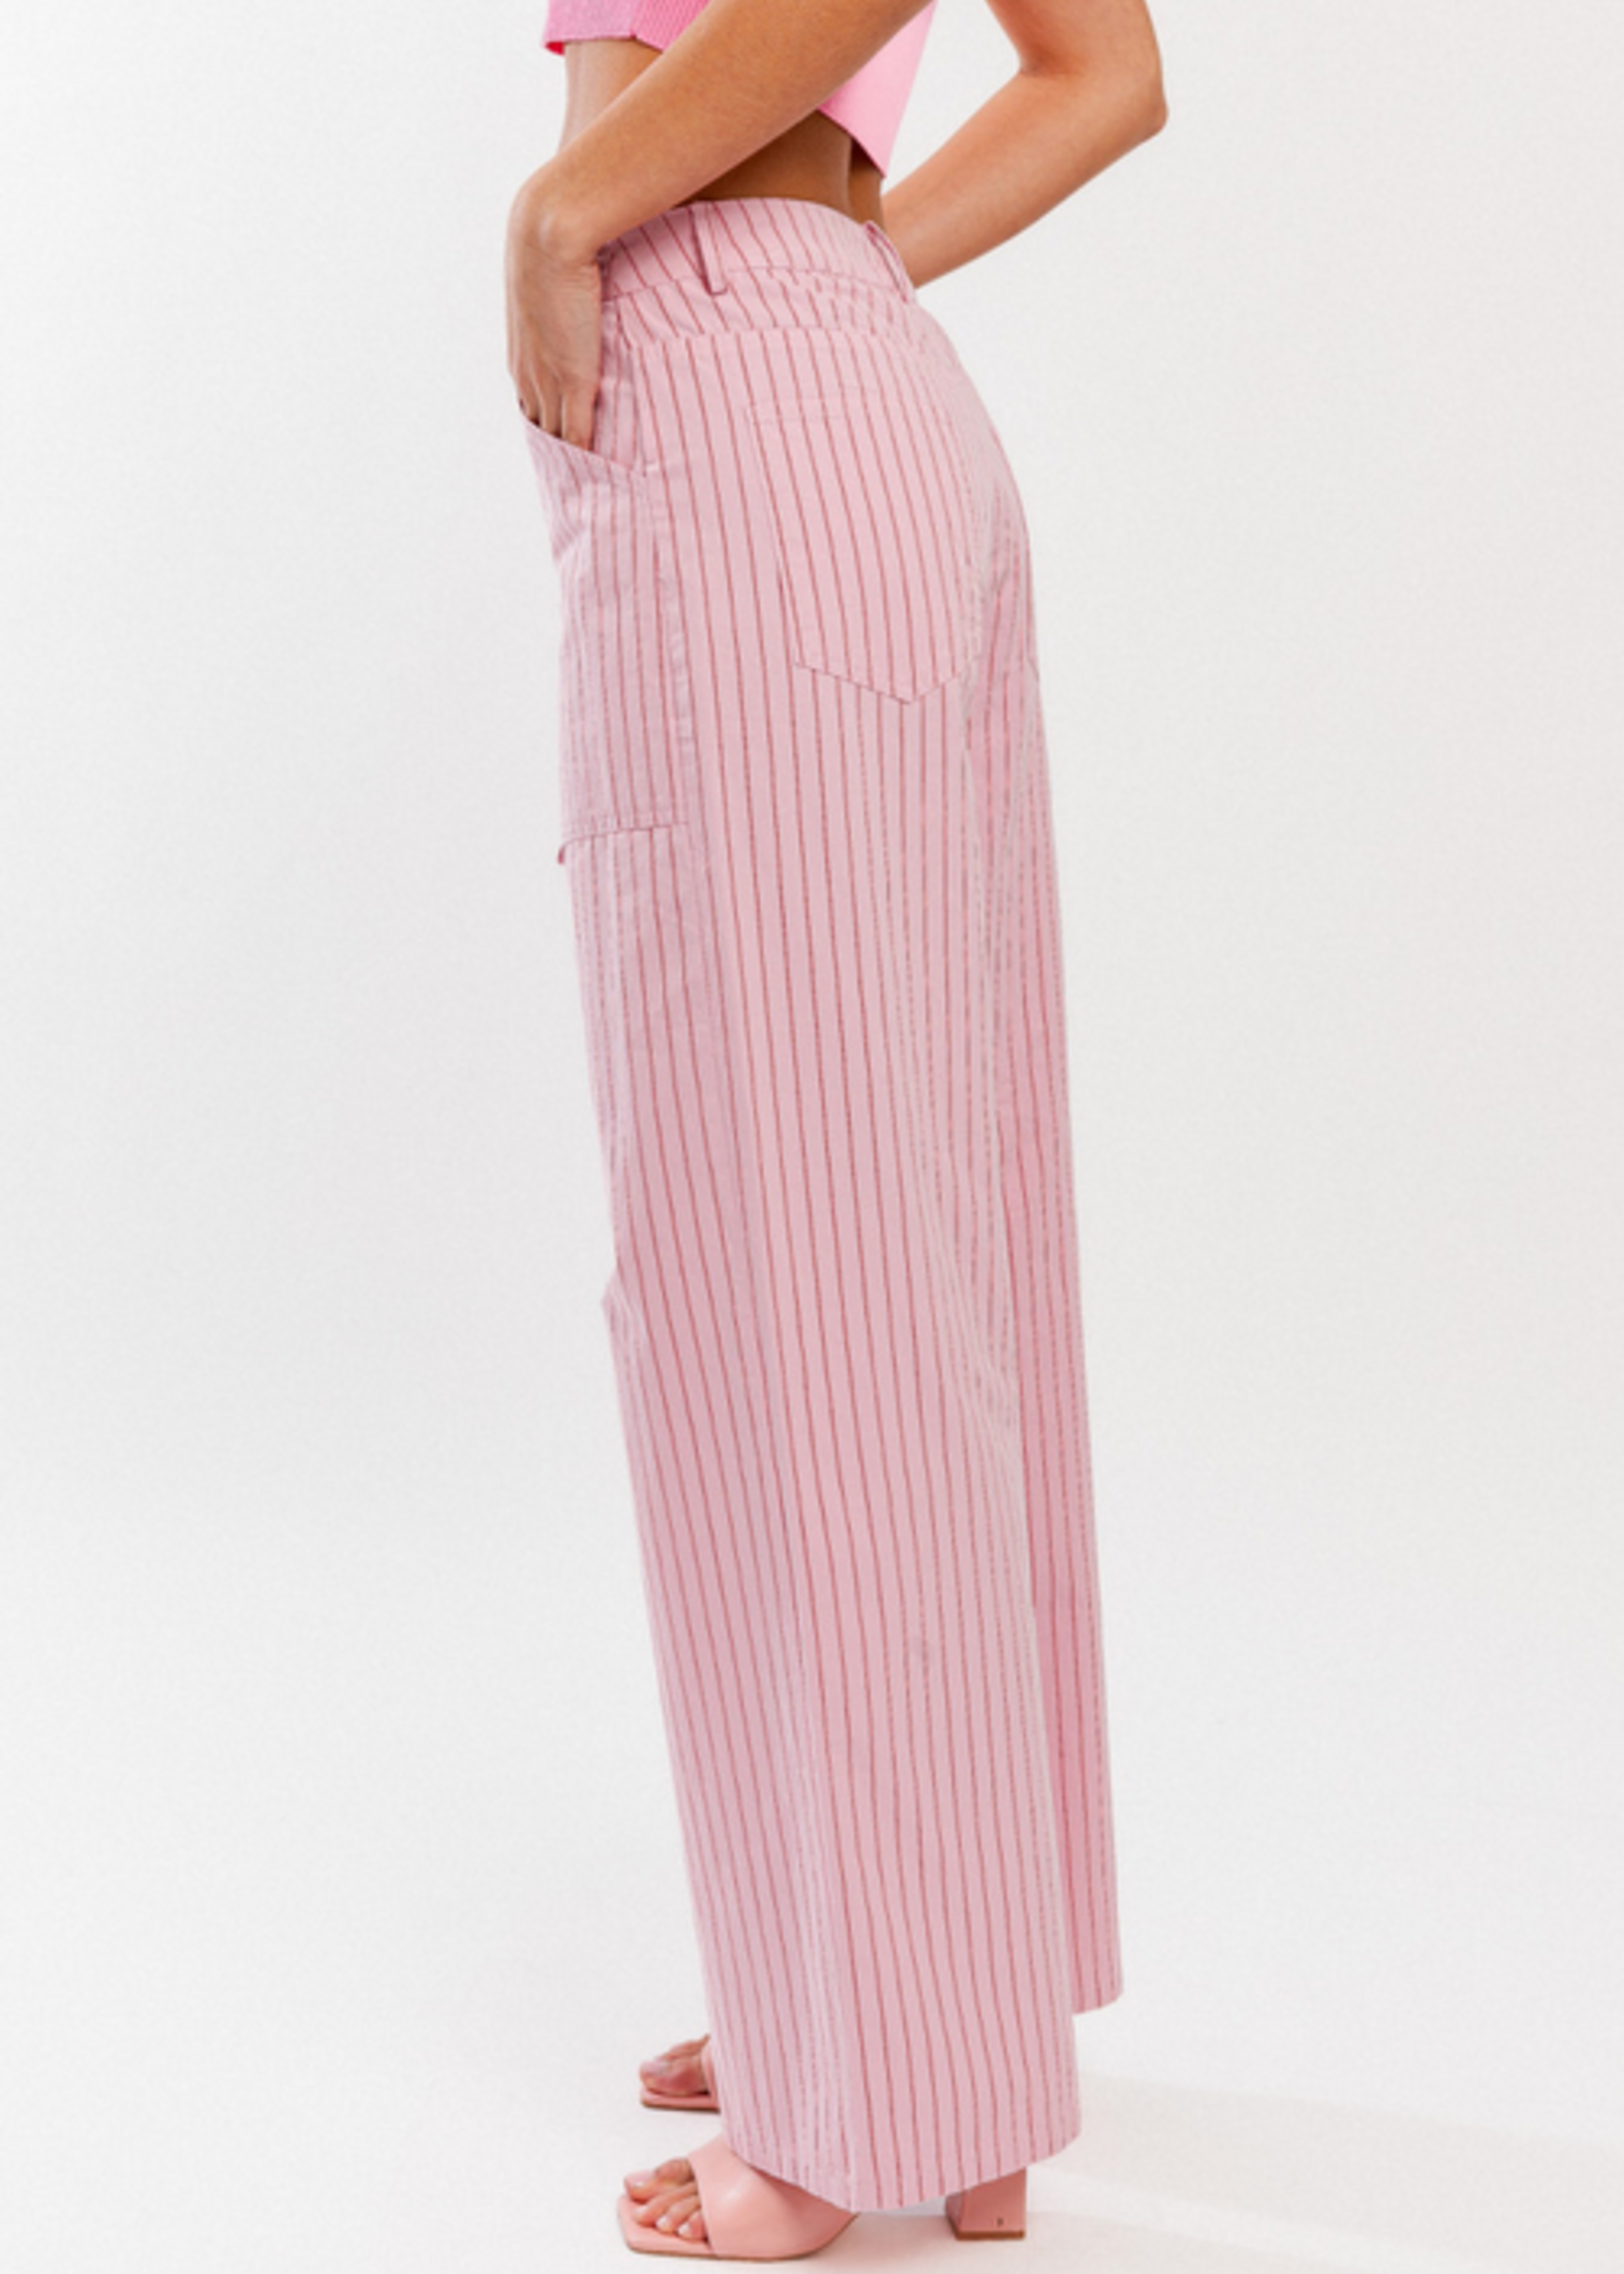 Women's trousers Odurock - PEONY STRIPES Pink - E23